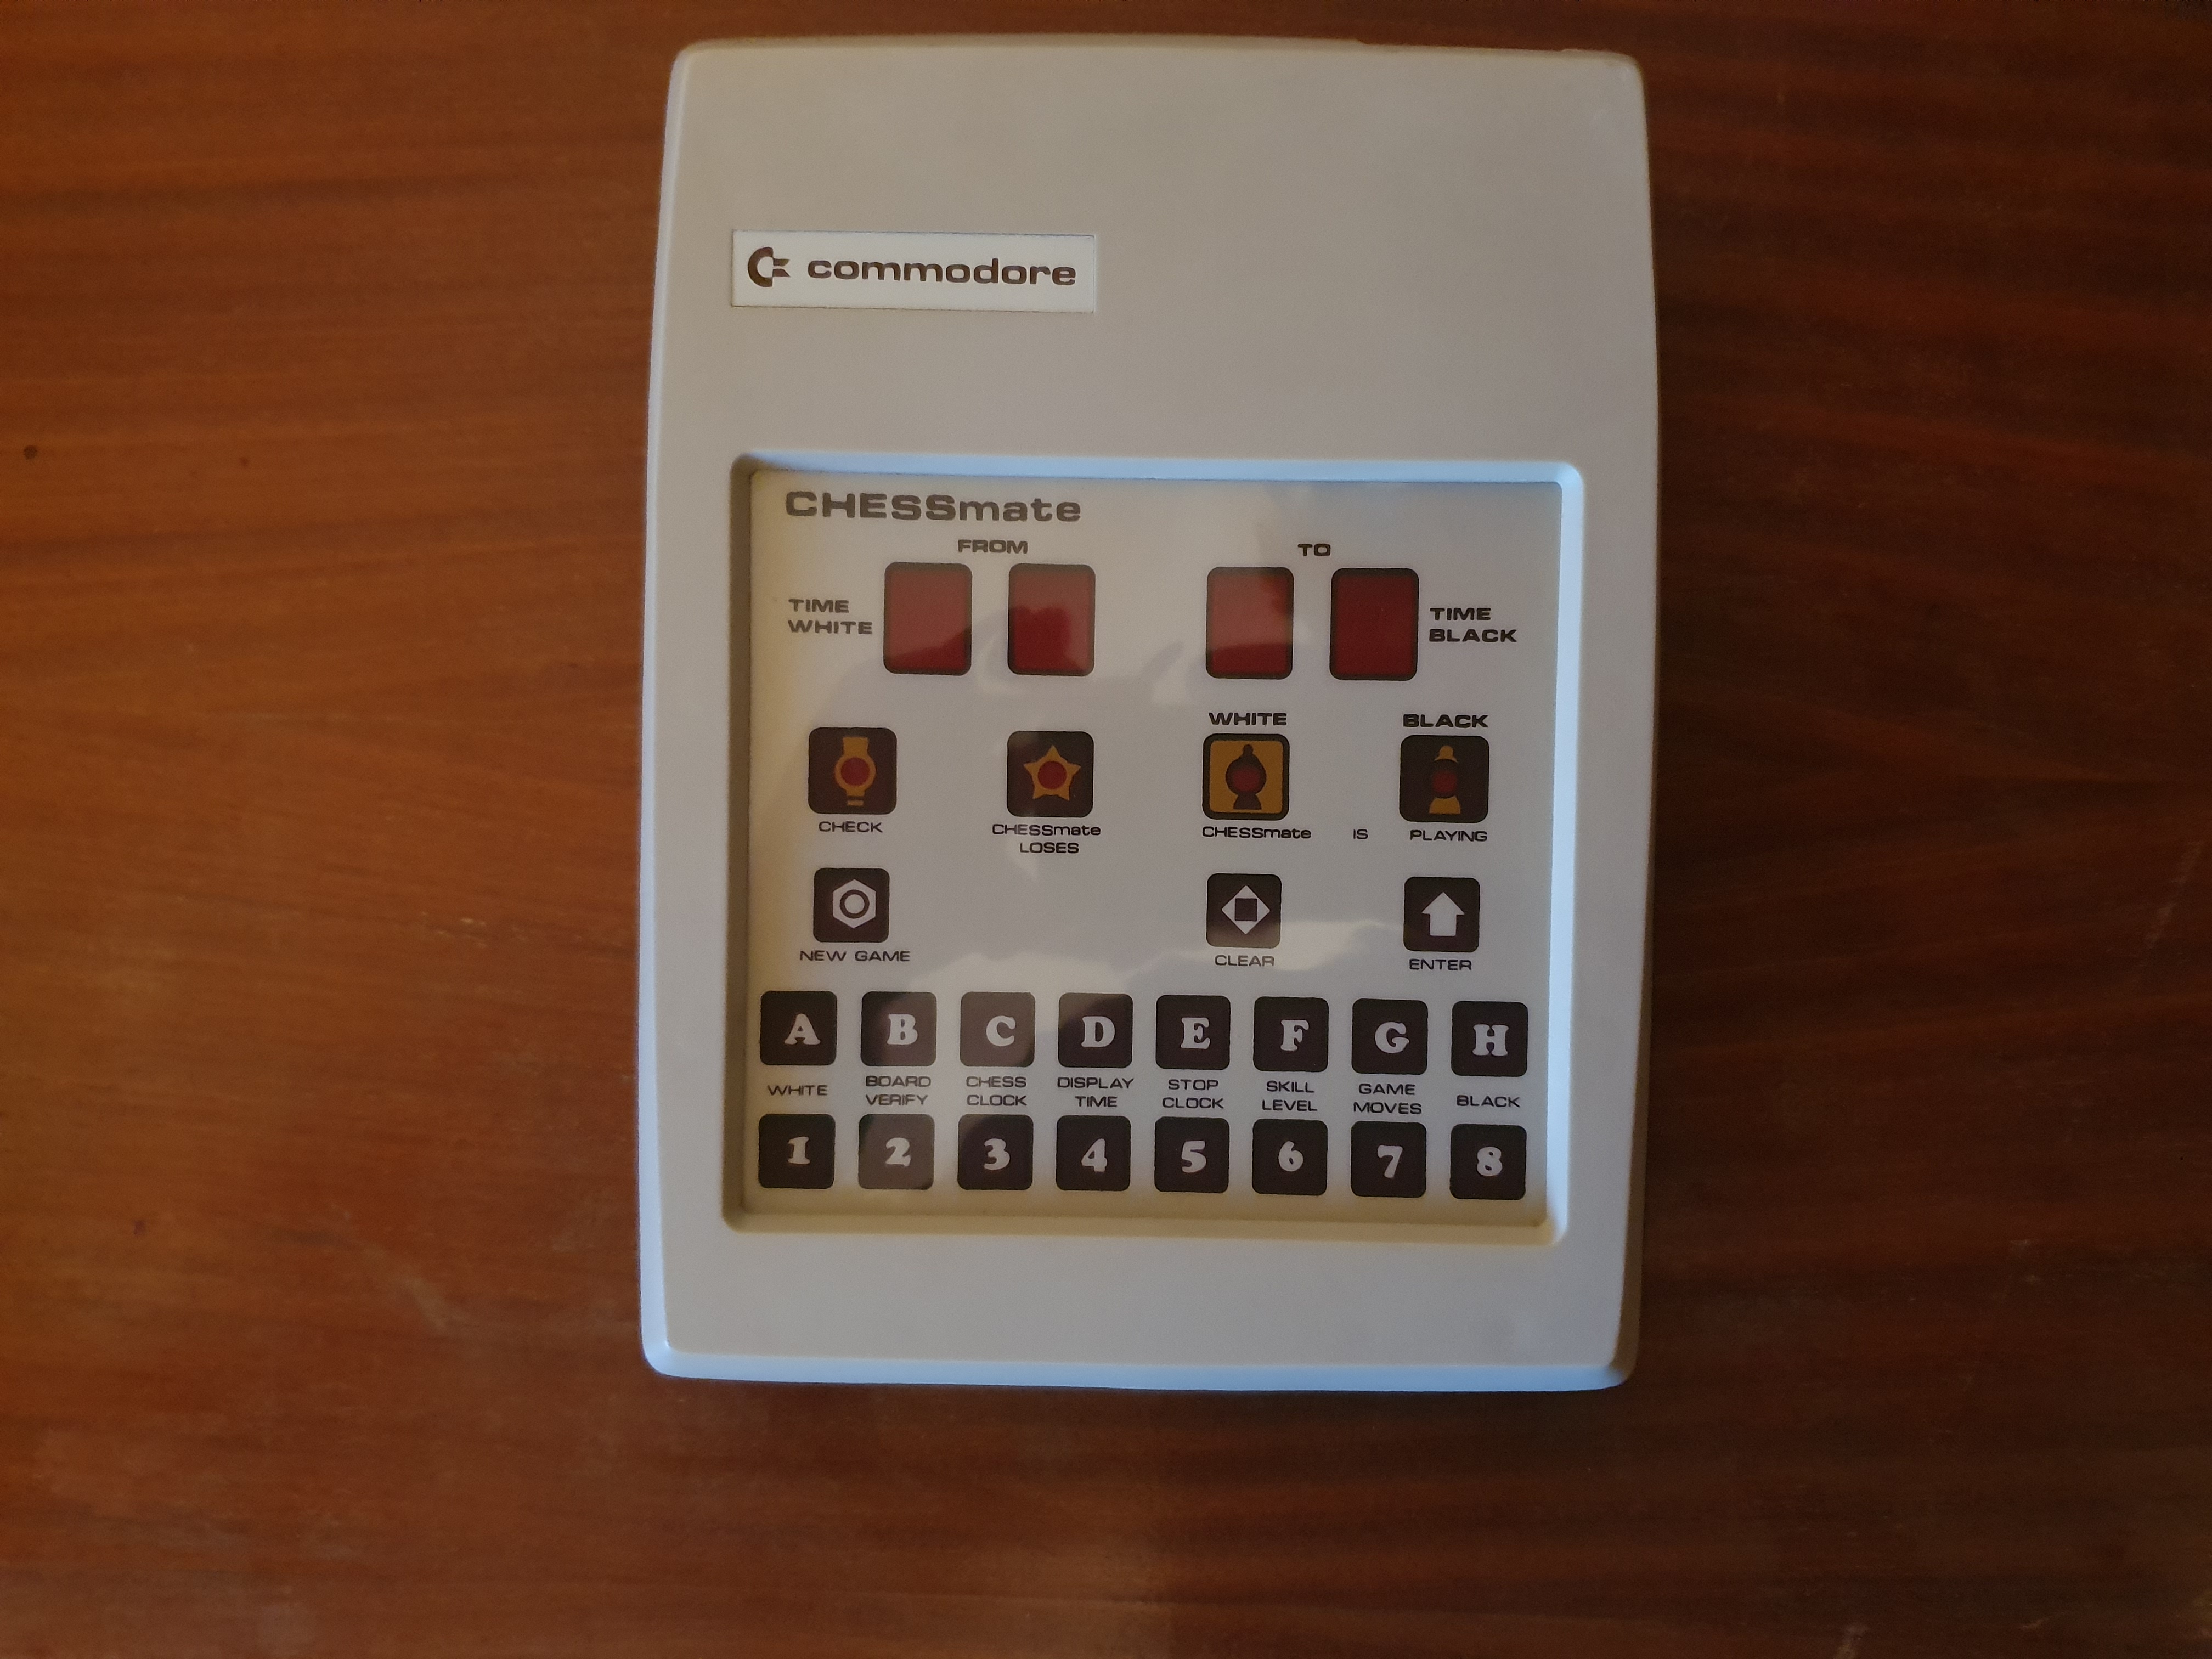 Commodore Business Machines - ChessMate